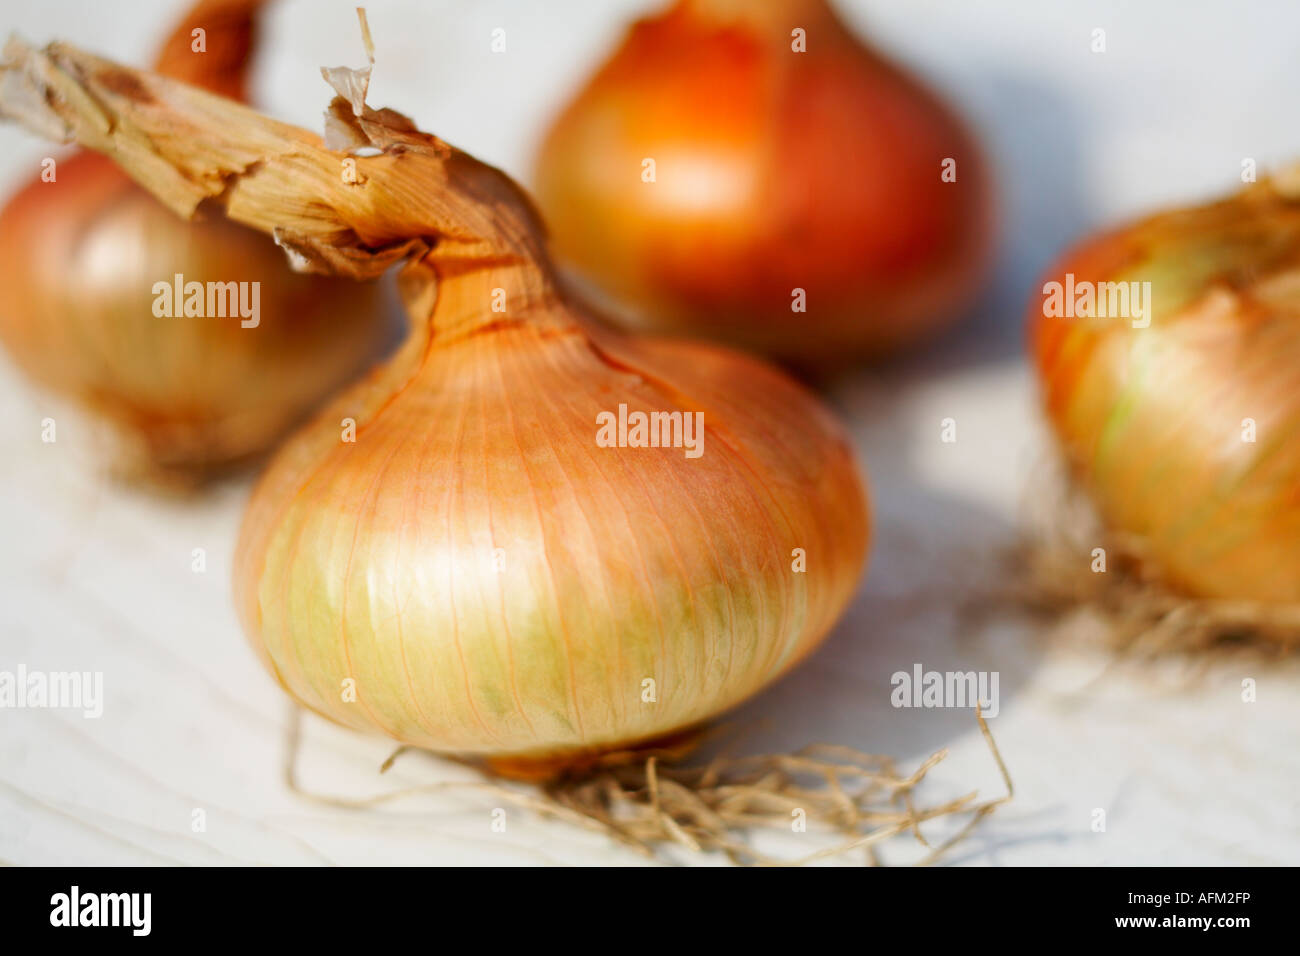 Onions Onion Stuttgarter variety flat onion close up view shallow depth of field Stock Photo